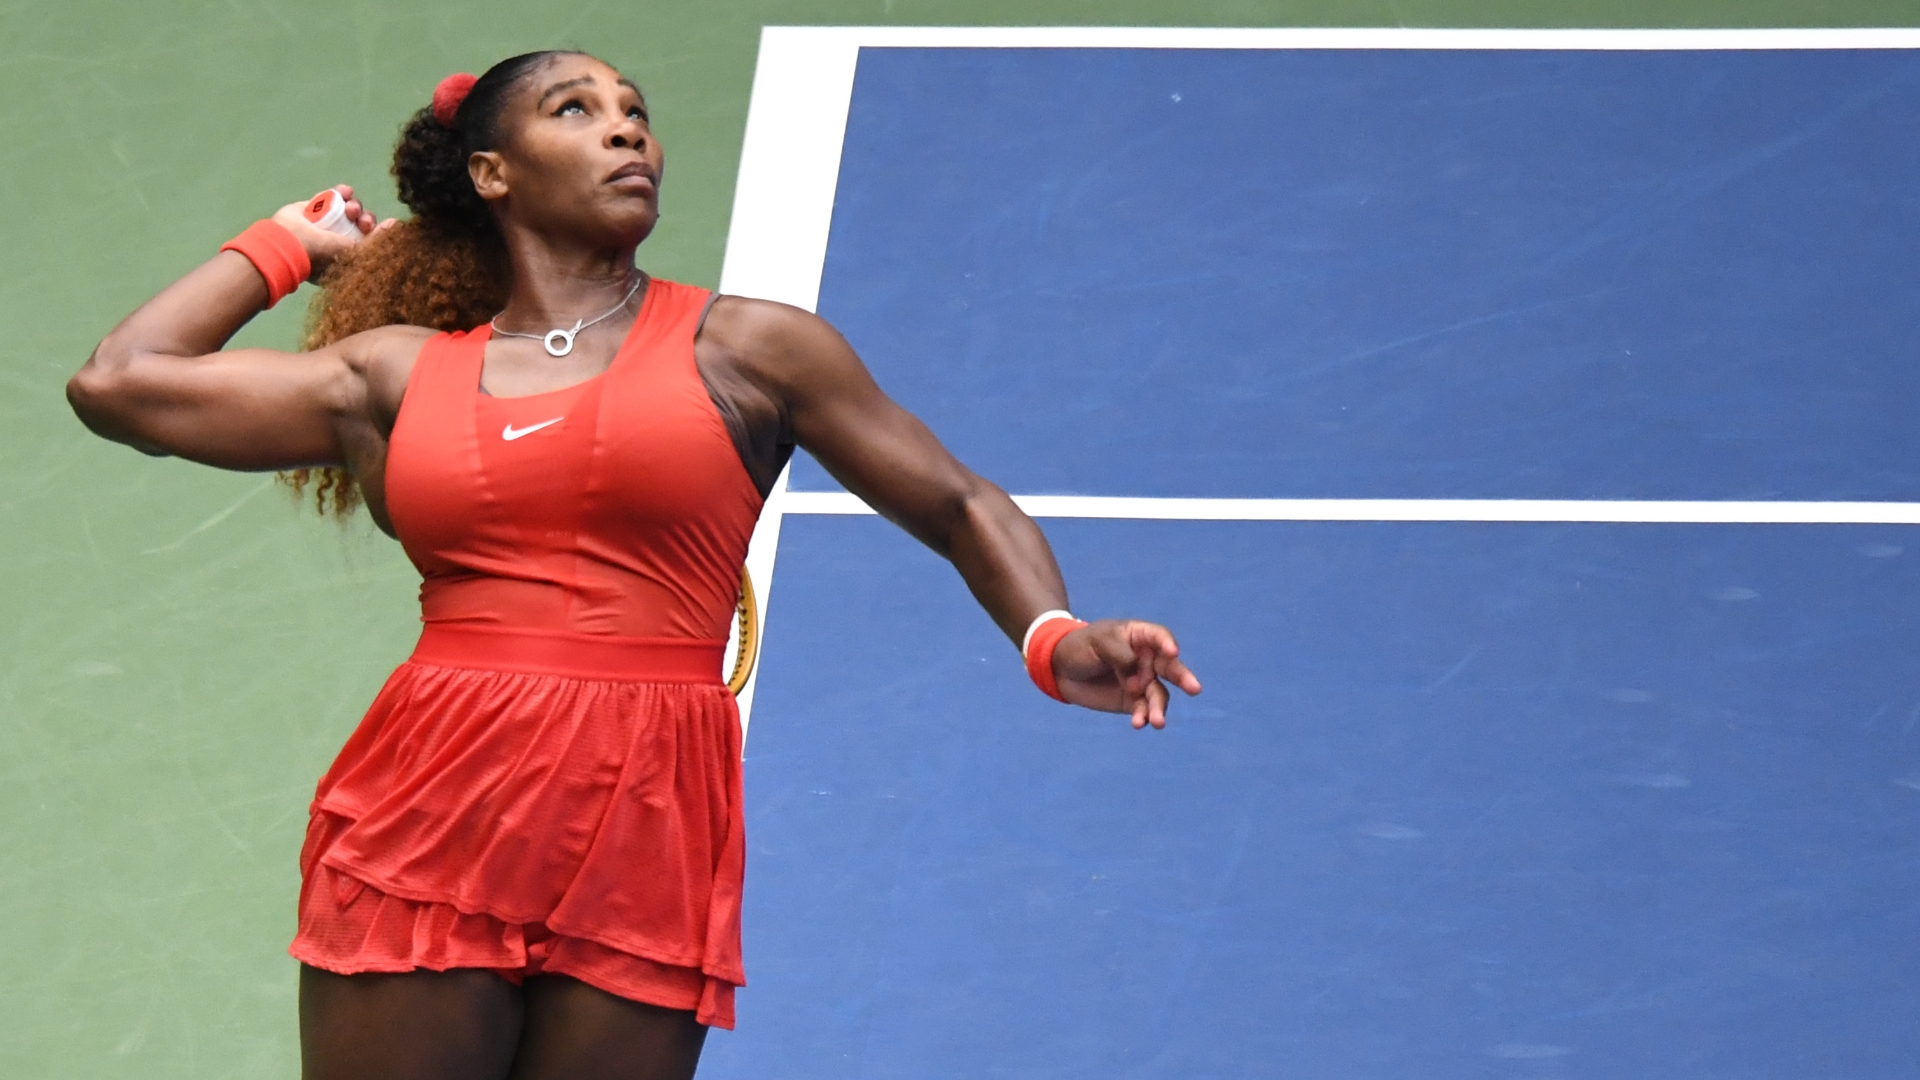 Serena's left-handed return, long rally wins second set